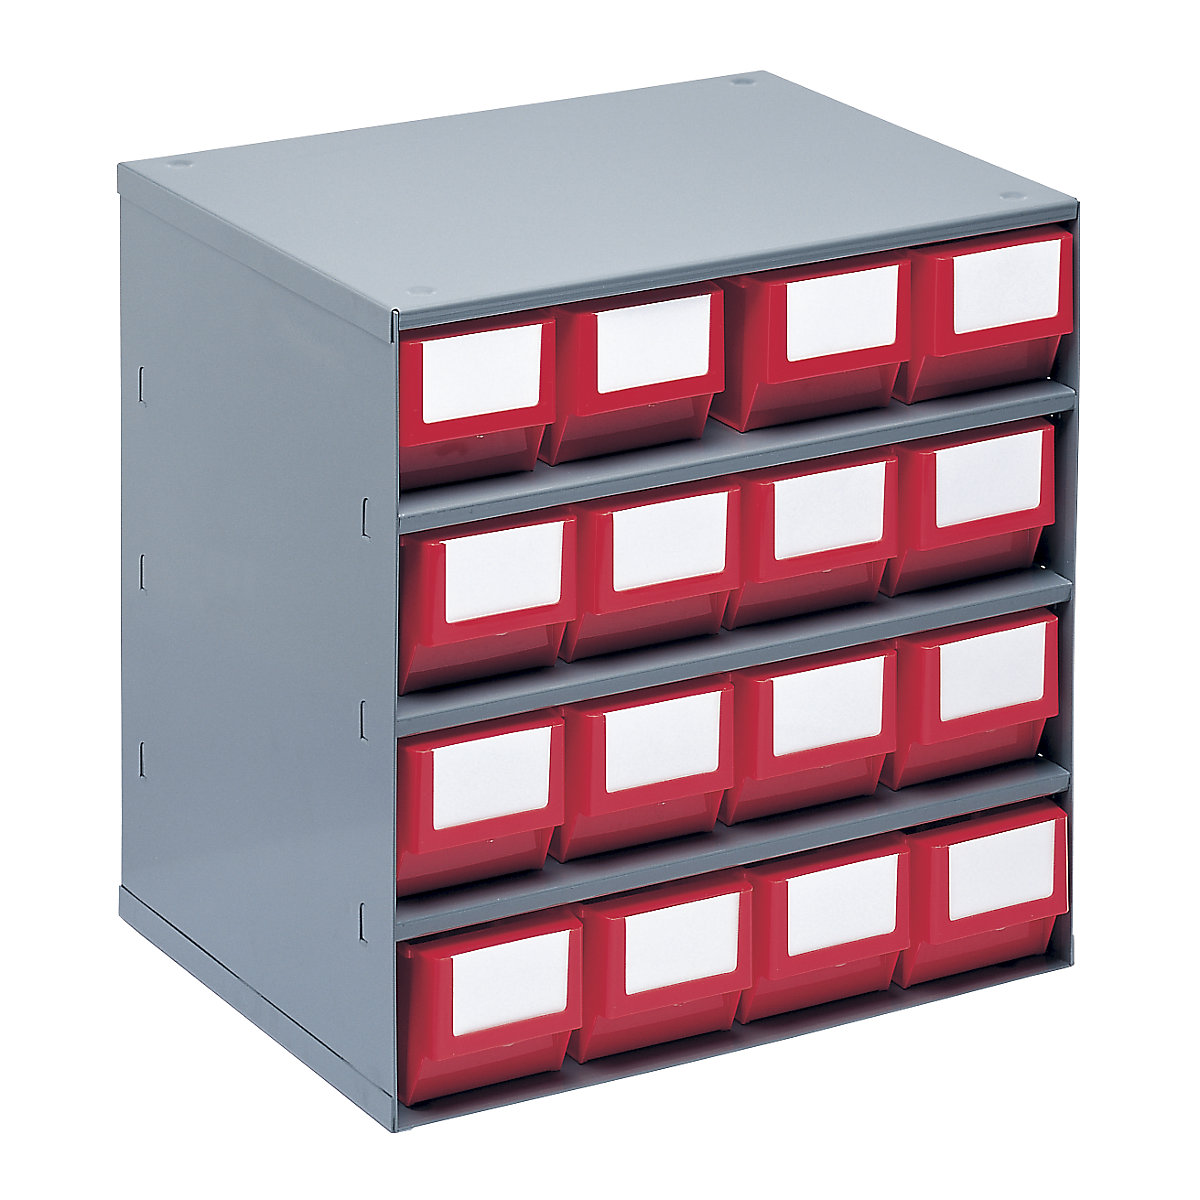 Predalno skladišče, nosilnost ohišja 75 kg, VxŠxG 395 x 376 x 300 mm, 16 predalov, rdeči predali-3